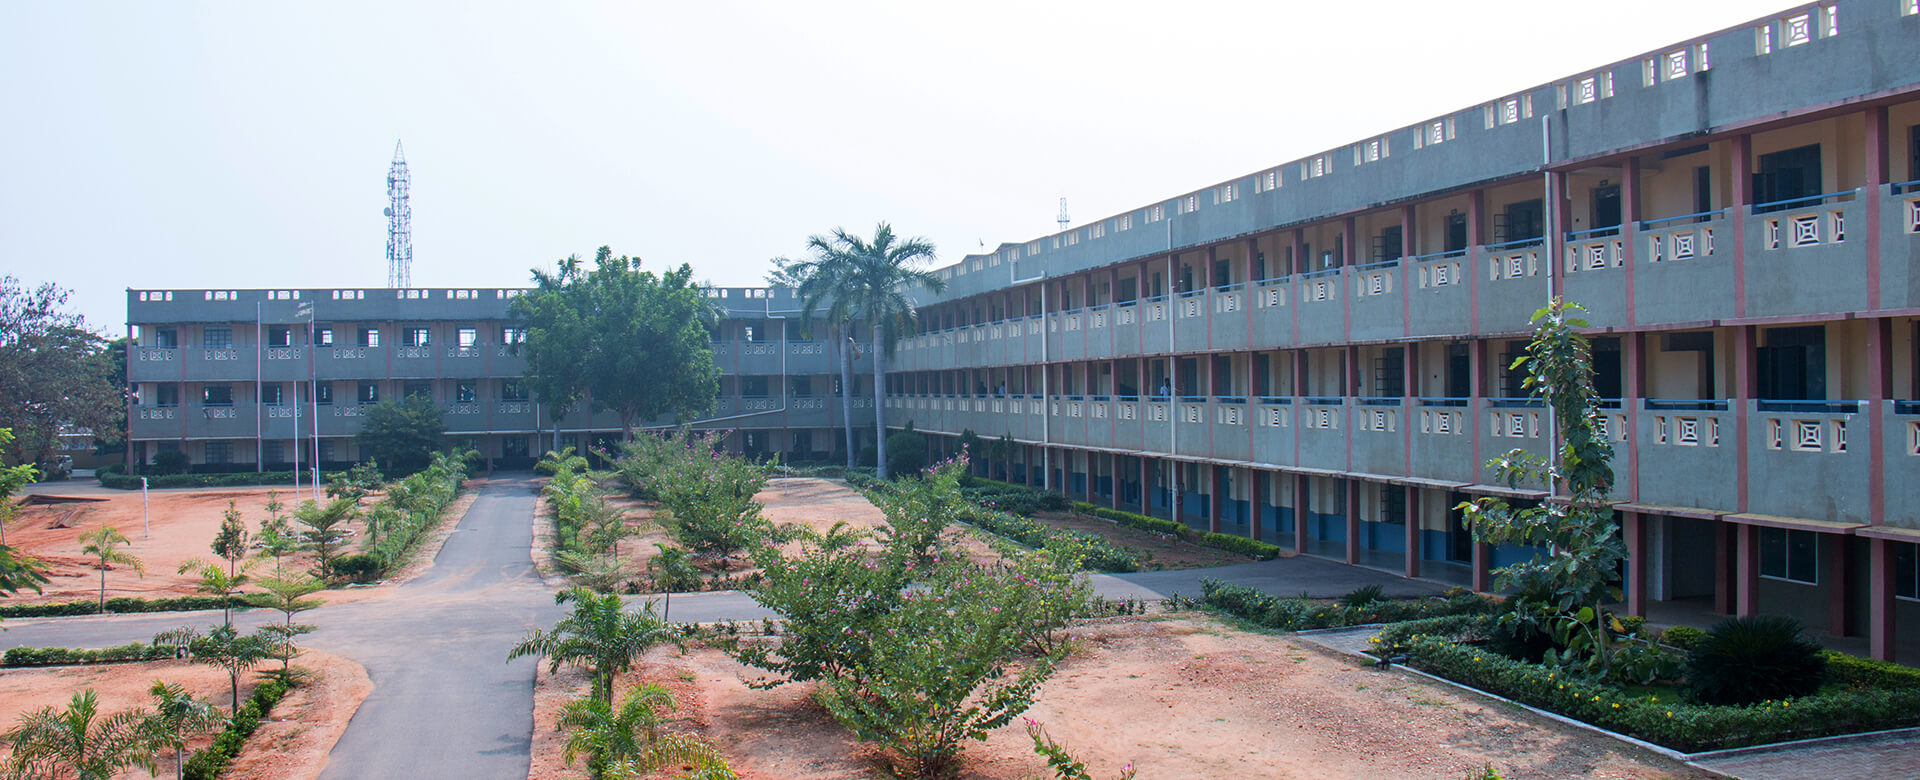 Kamadhenu Arts and Science College, Erode Image